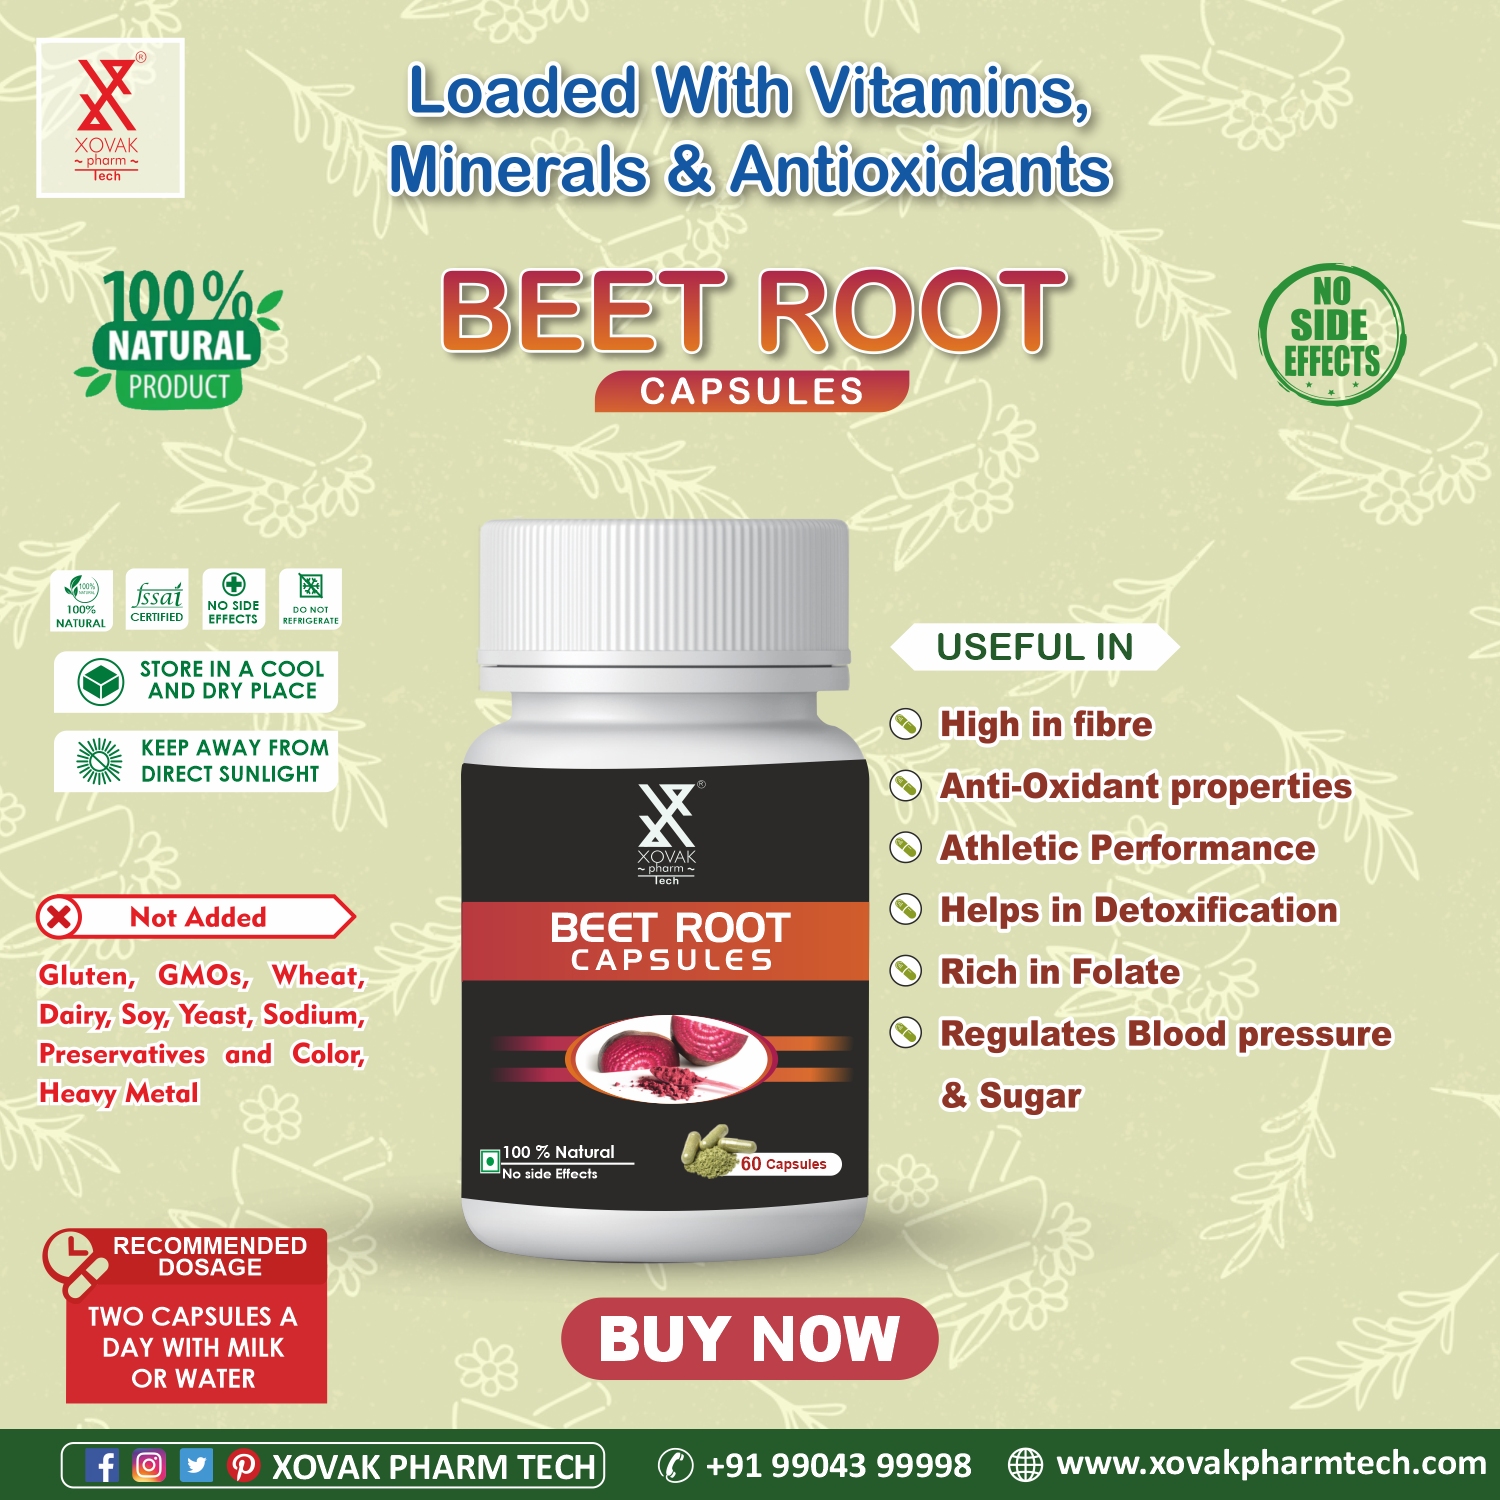 Buy Xovak Organic Beet Root Capsules (60caps) at Best Price Online